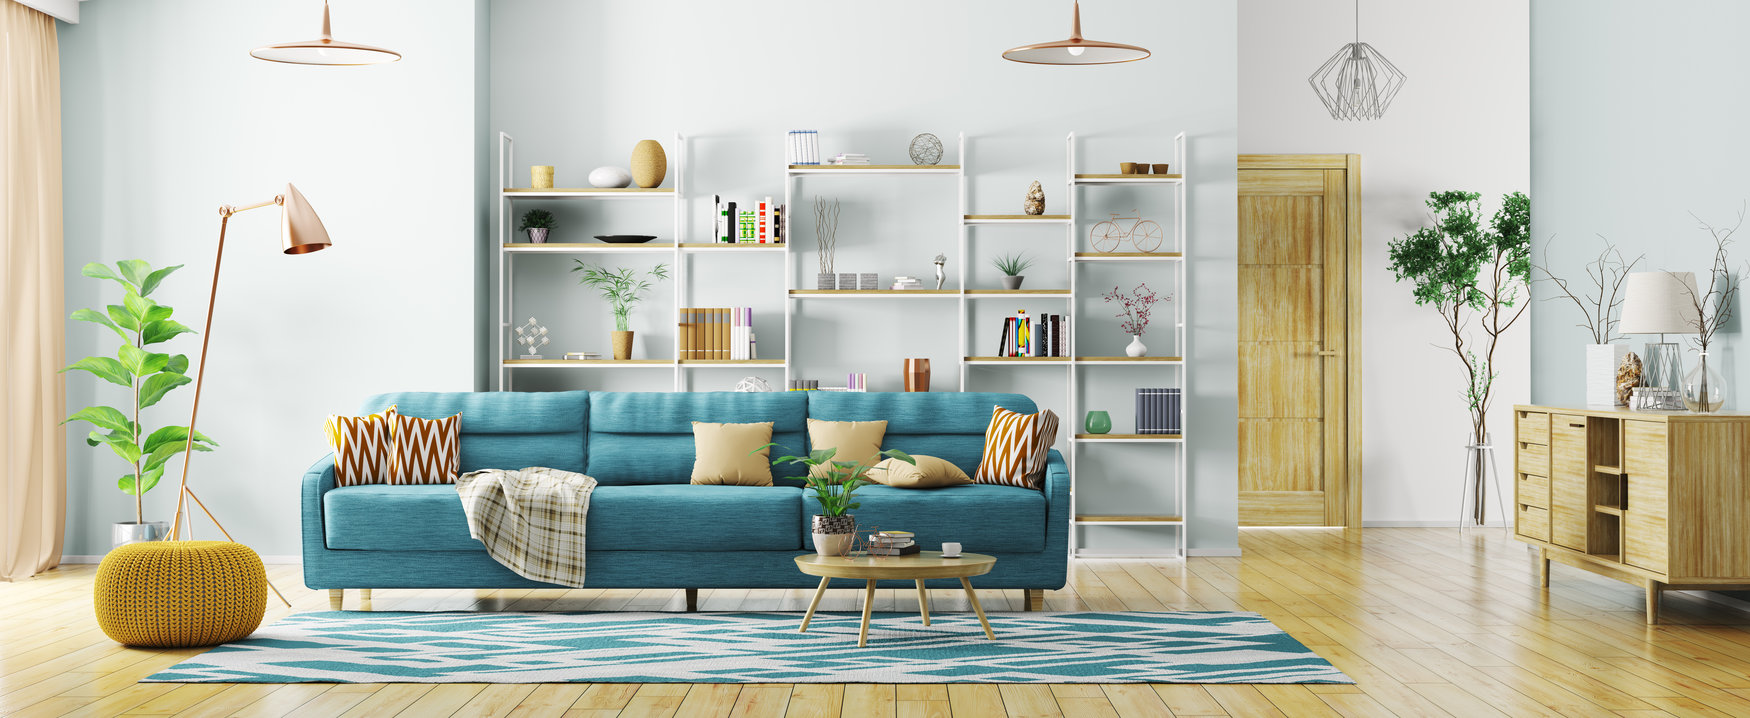 7 Inspiring Ways to Make Your Modern Living Room Look Stylish